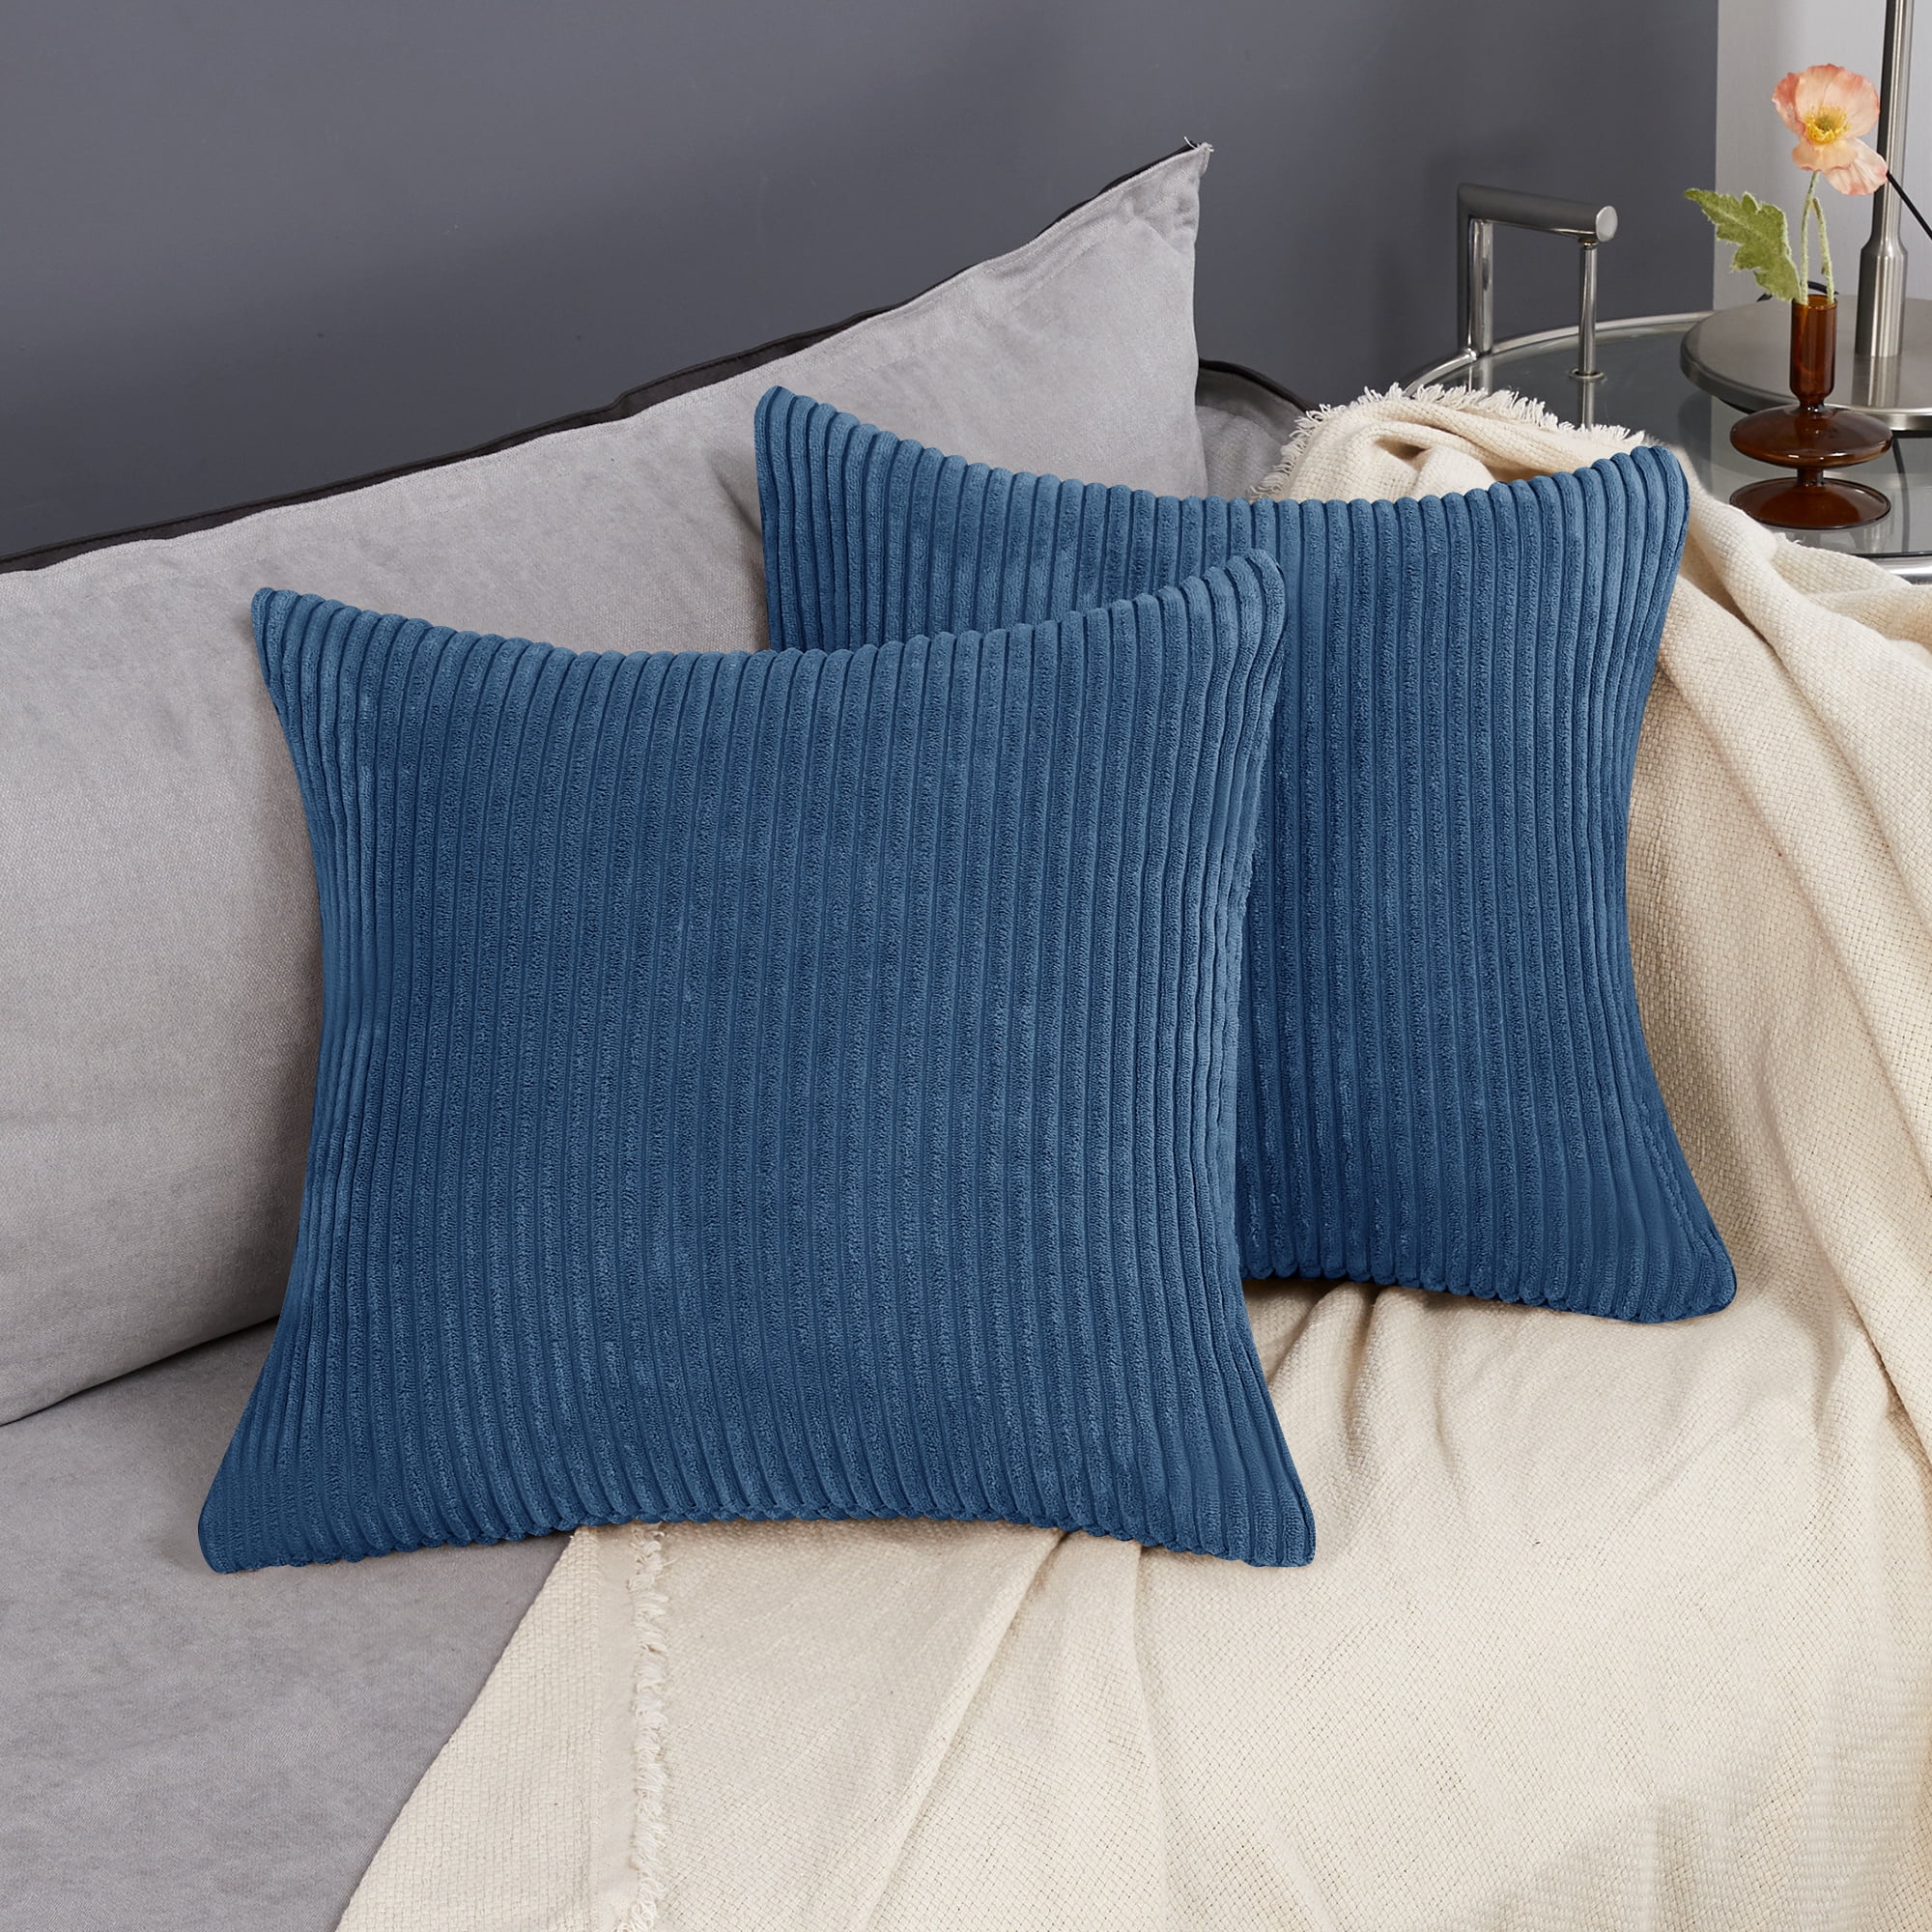 Pillowcase 40x40 in 8 Dimensions Pillow Case Decorative Cushion Pillow Cushion Covers Top 